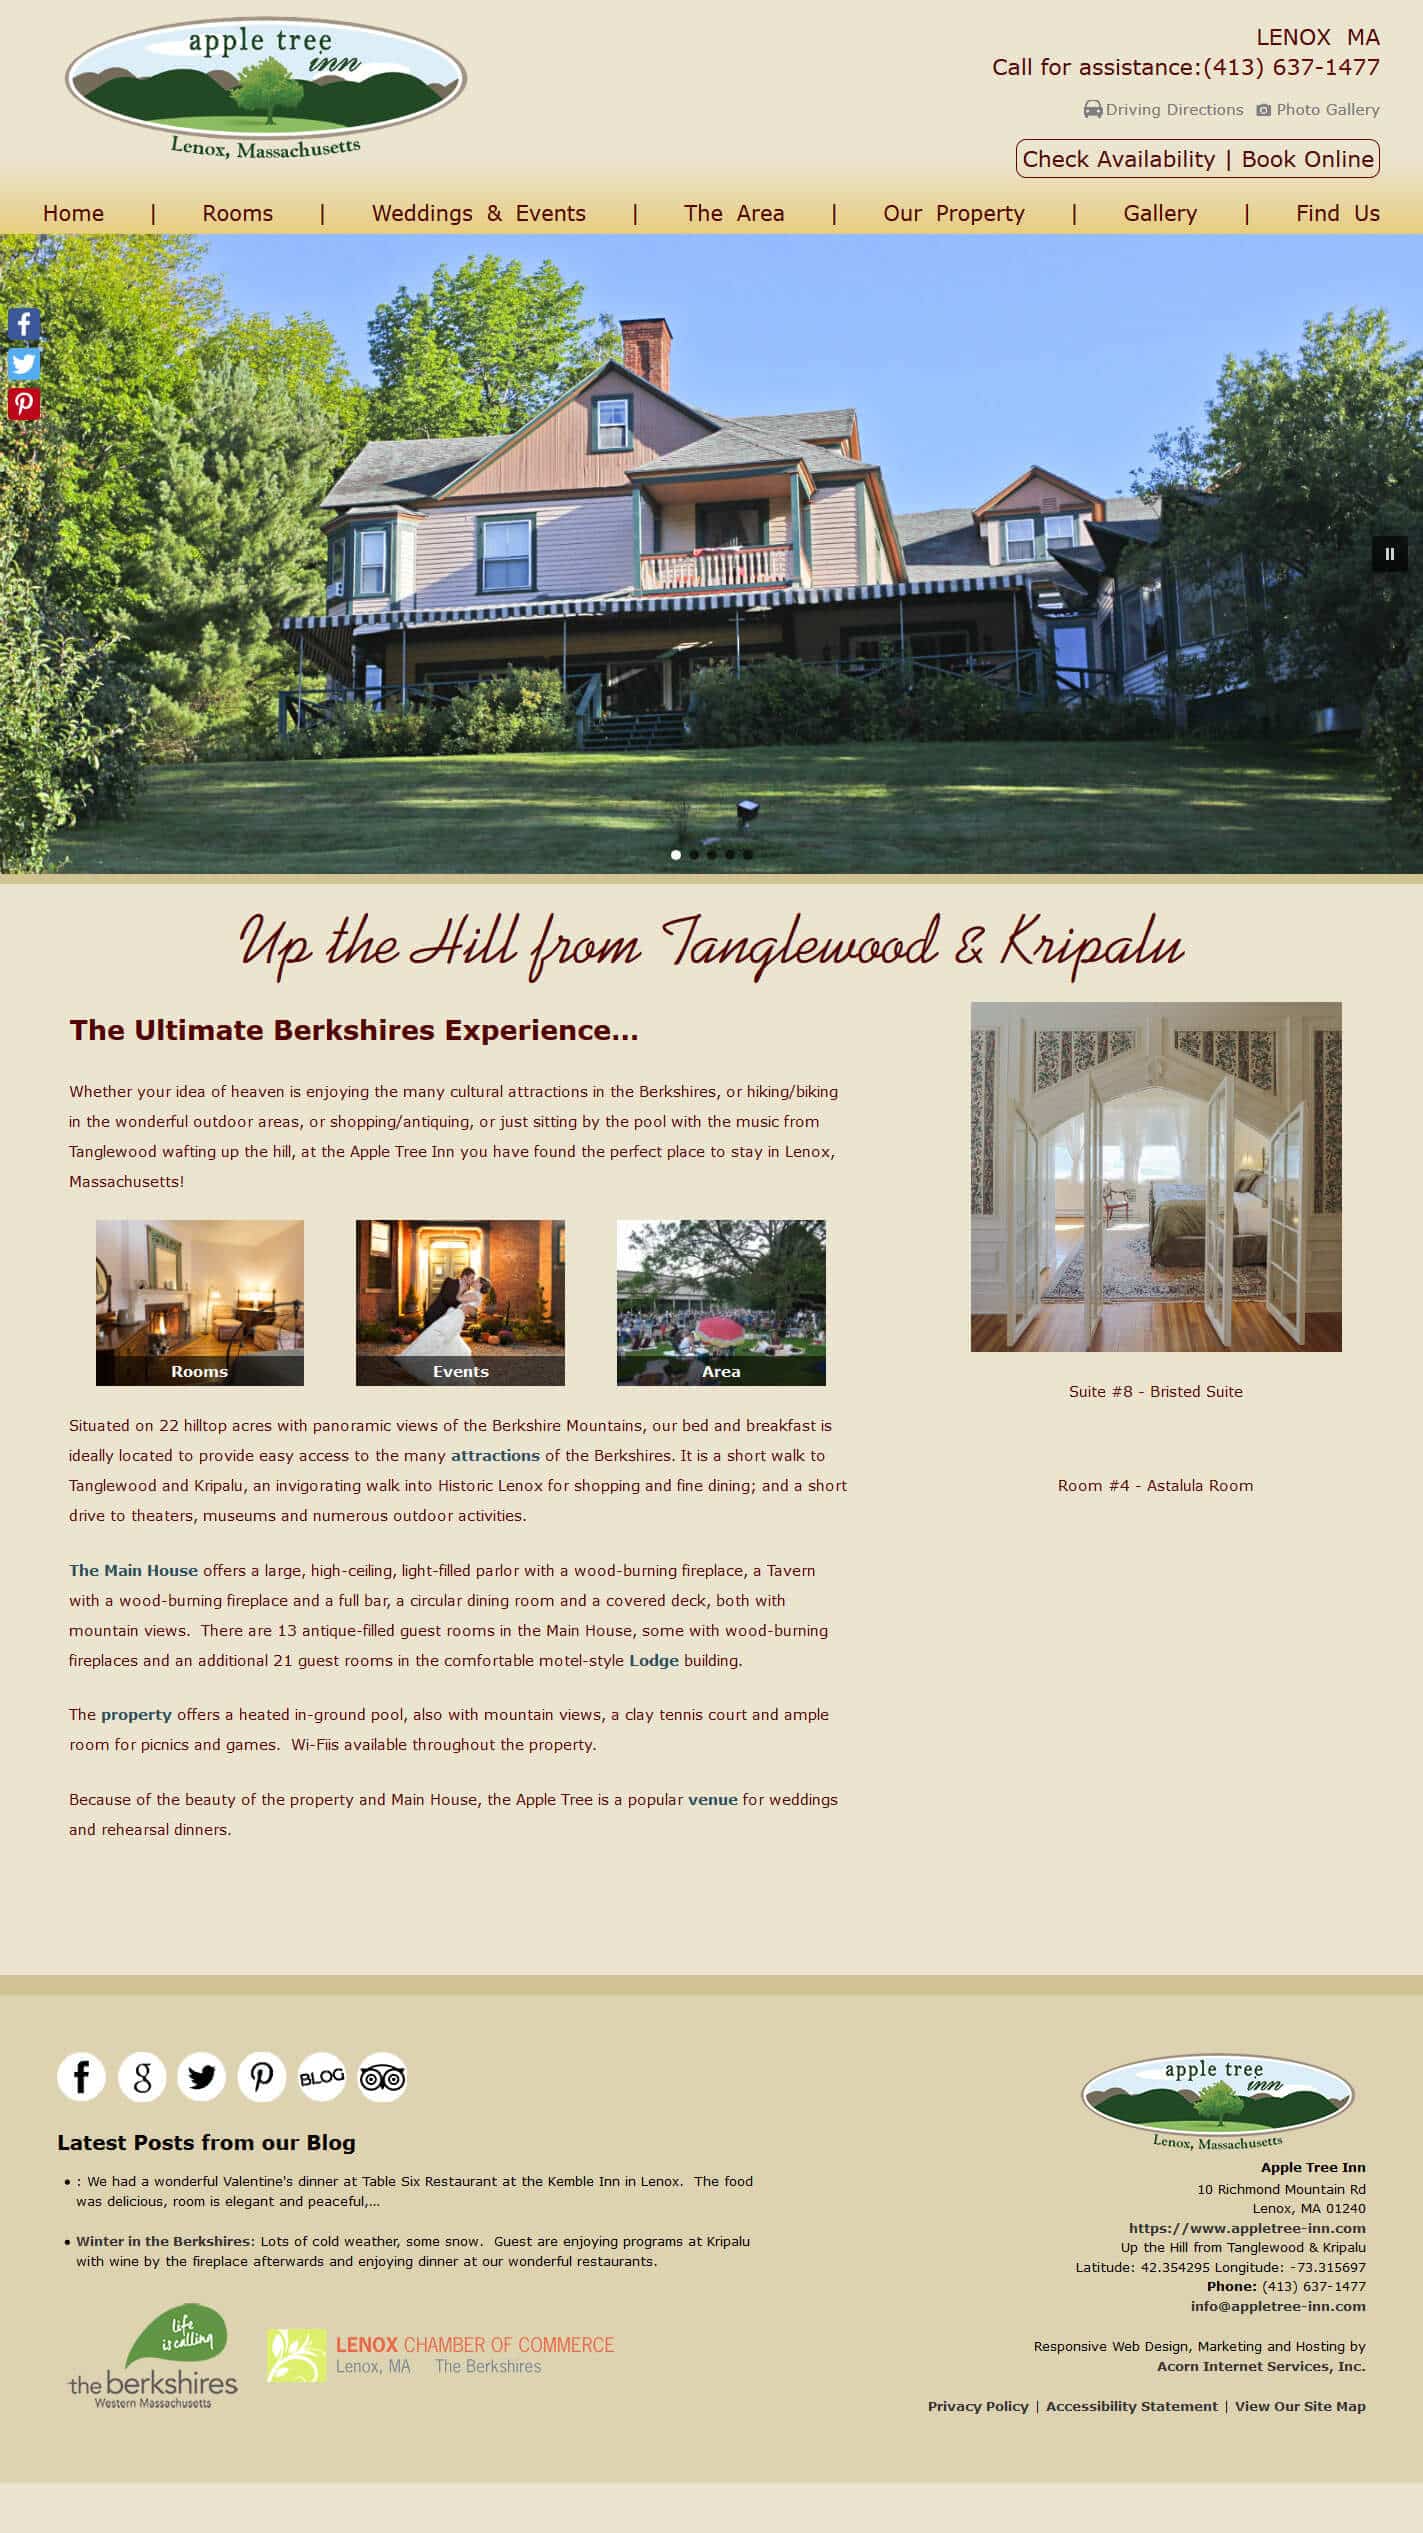 Apple Tree inn's website home page 